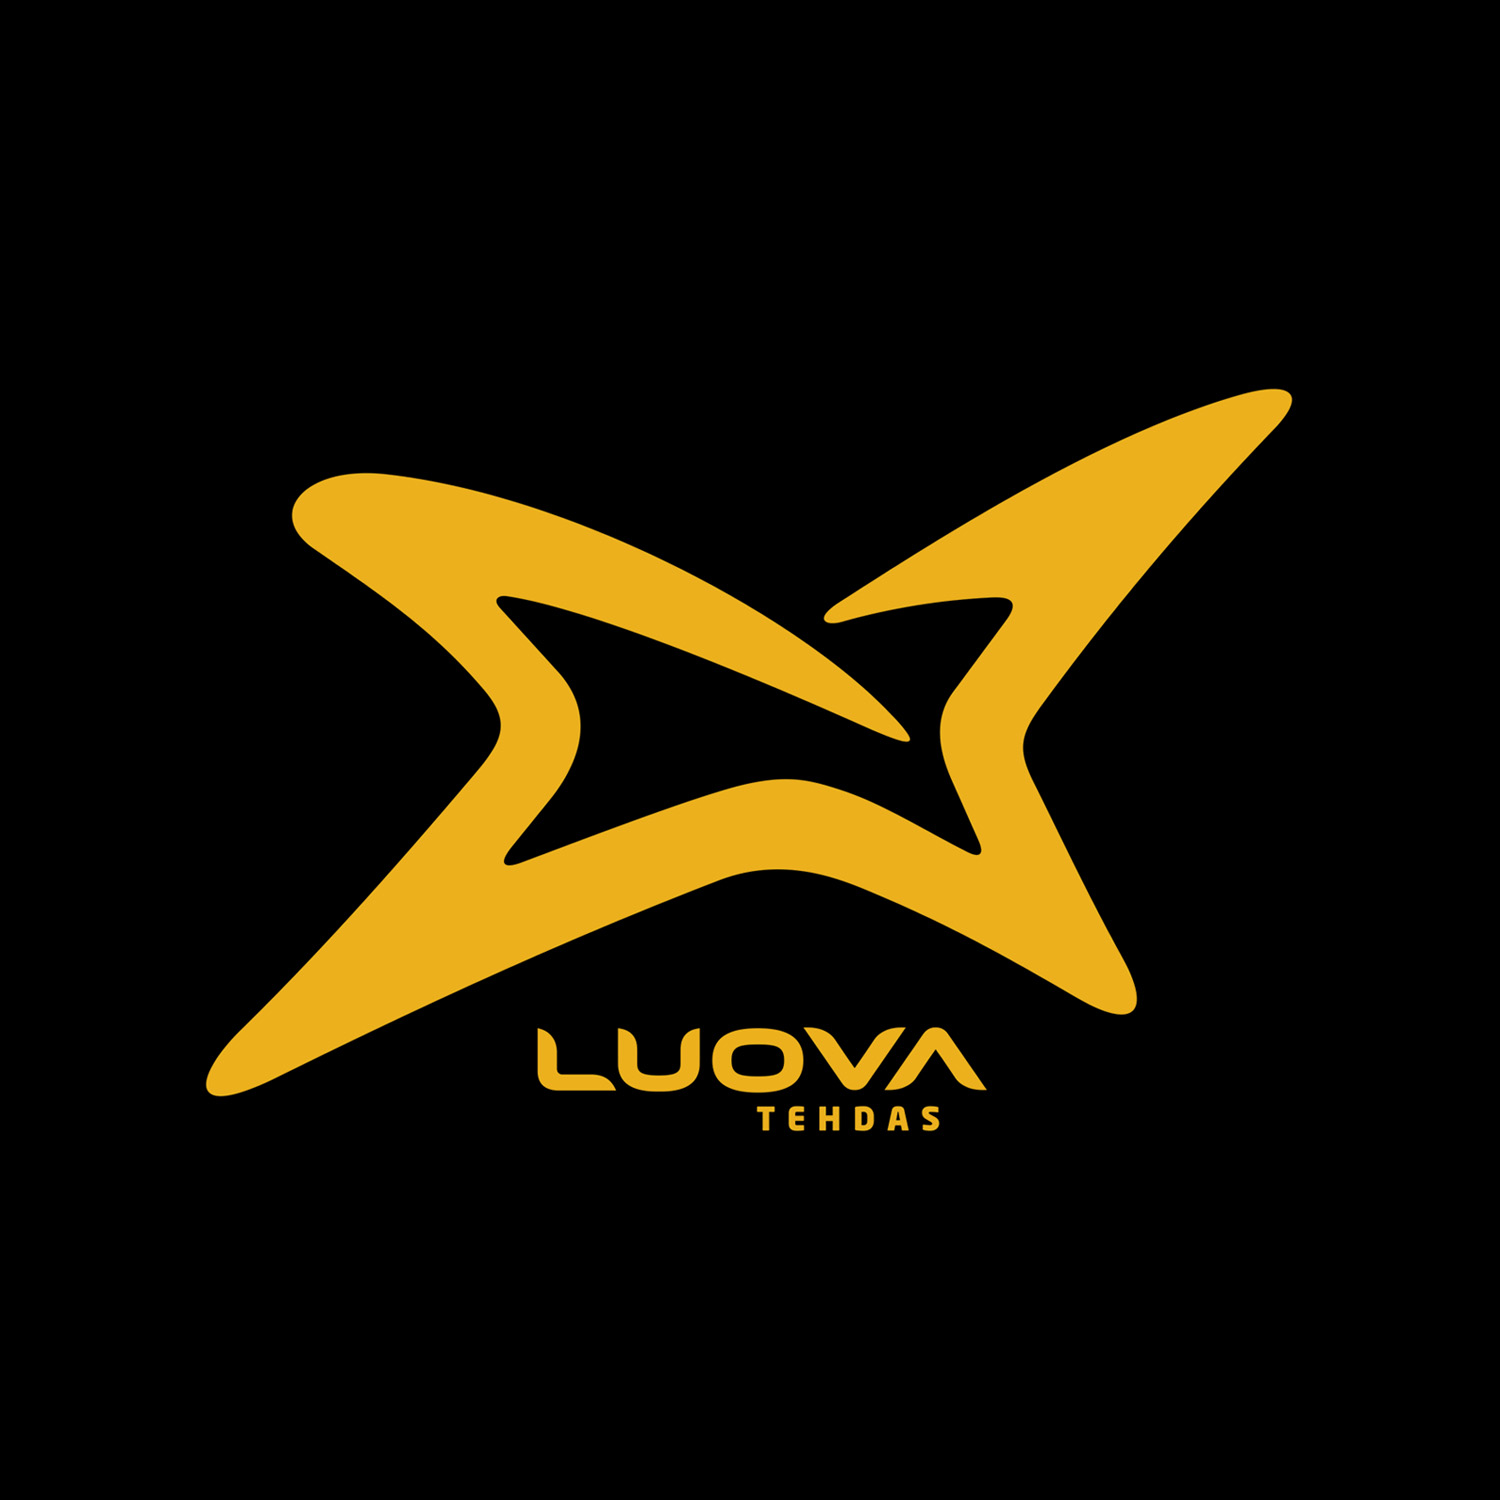 Logo, Luova Tehdas, made by Therwiz Design